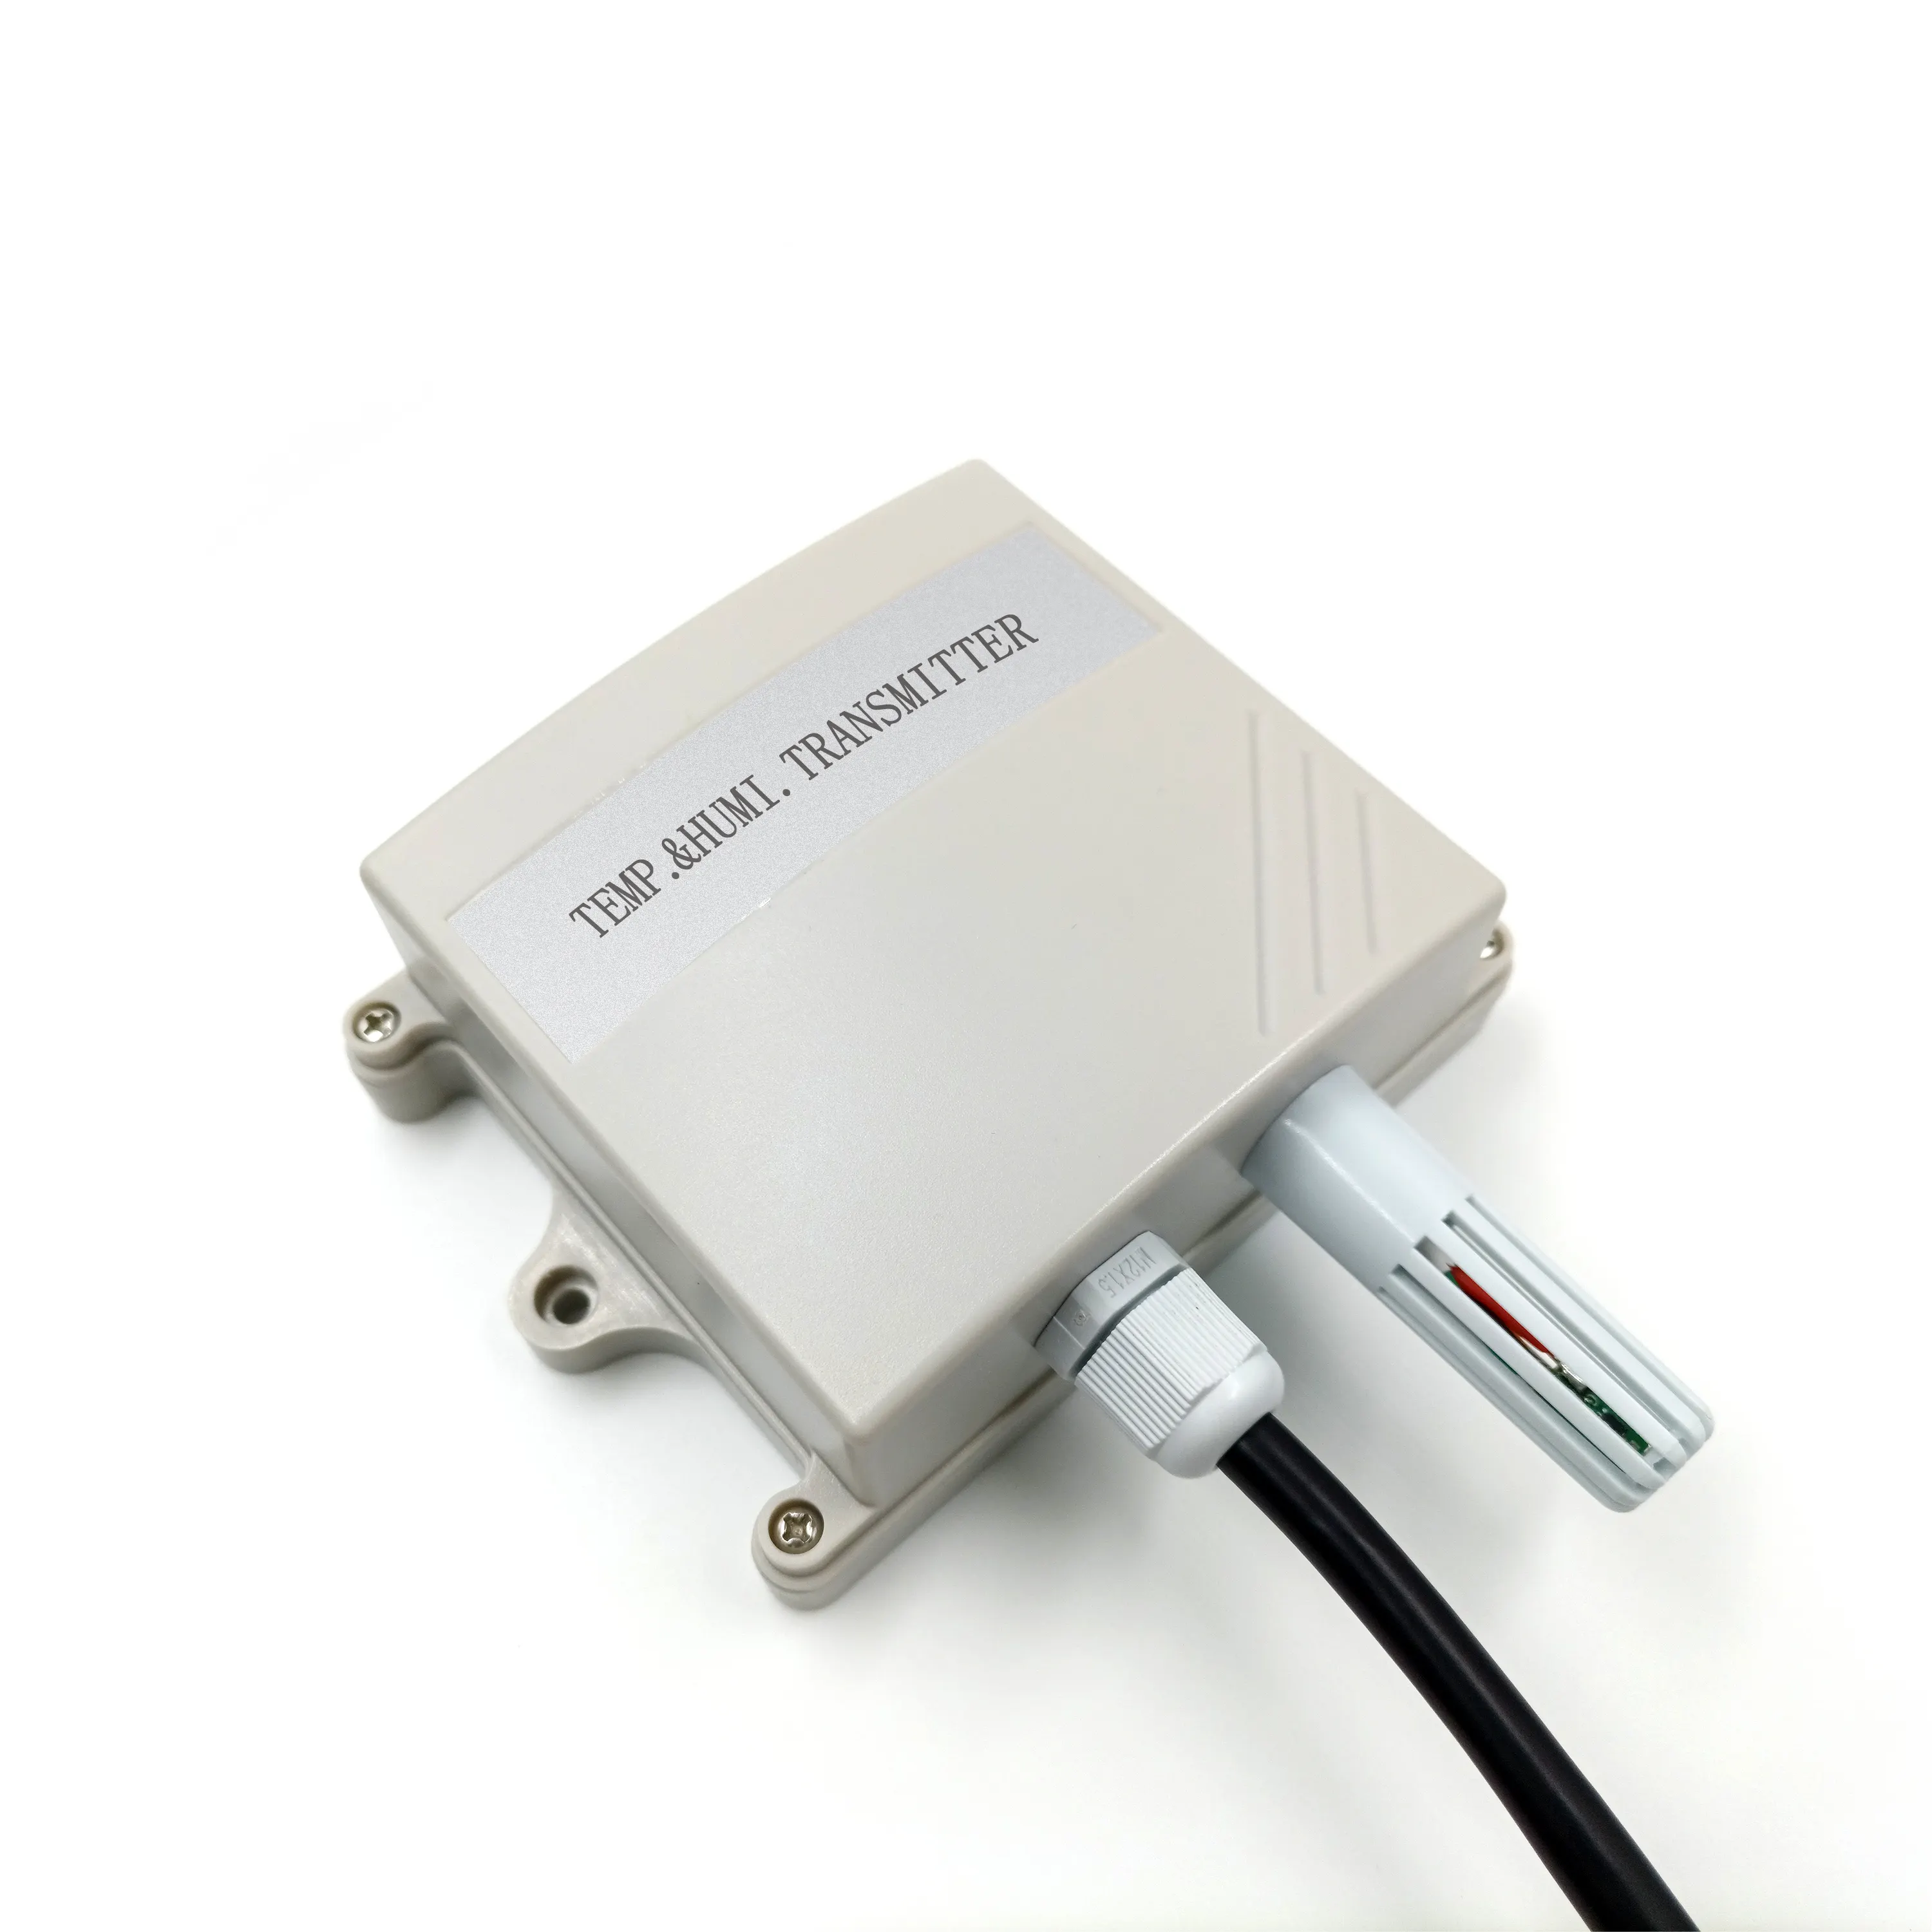 Fosensor Temperature Humidity Transmitter Rs485 Wifi Temperature Alarm Sensor